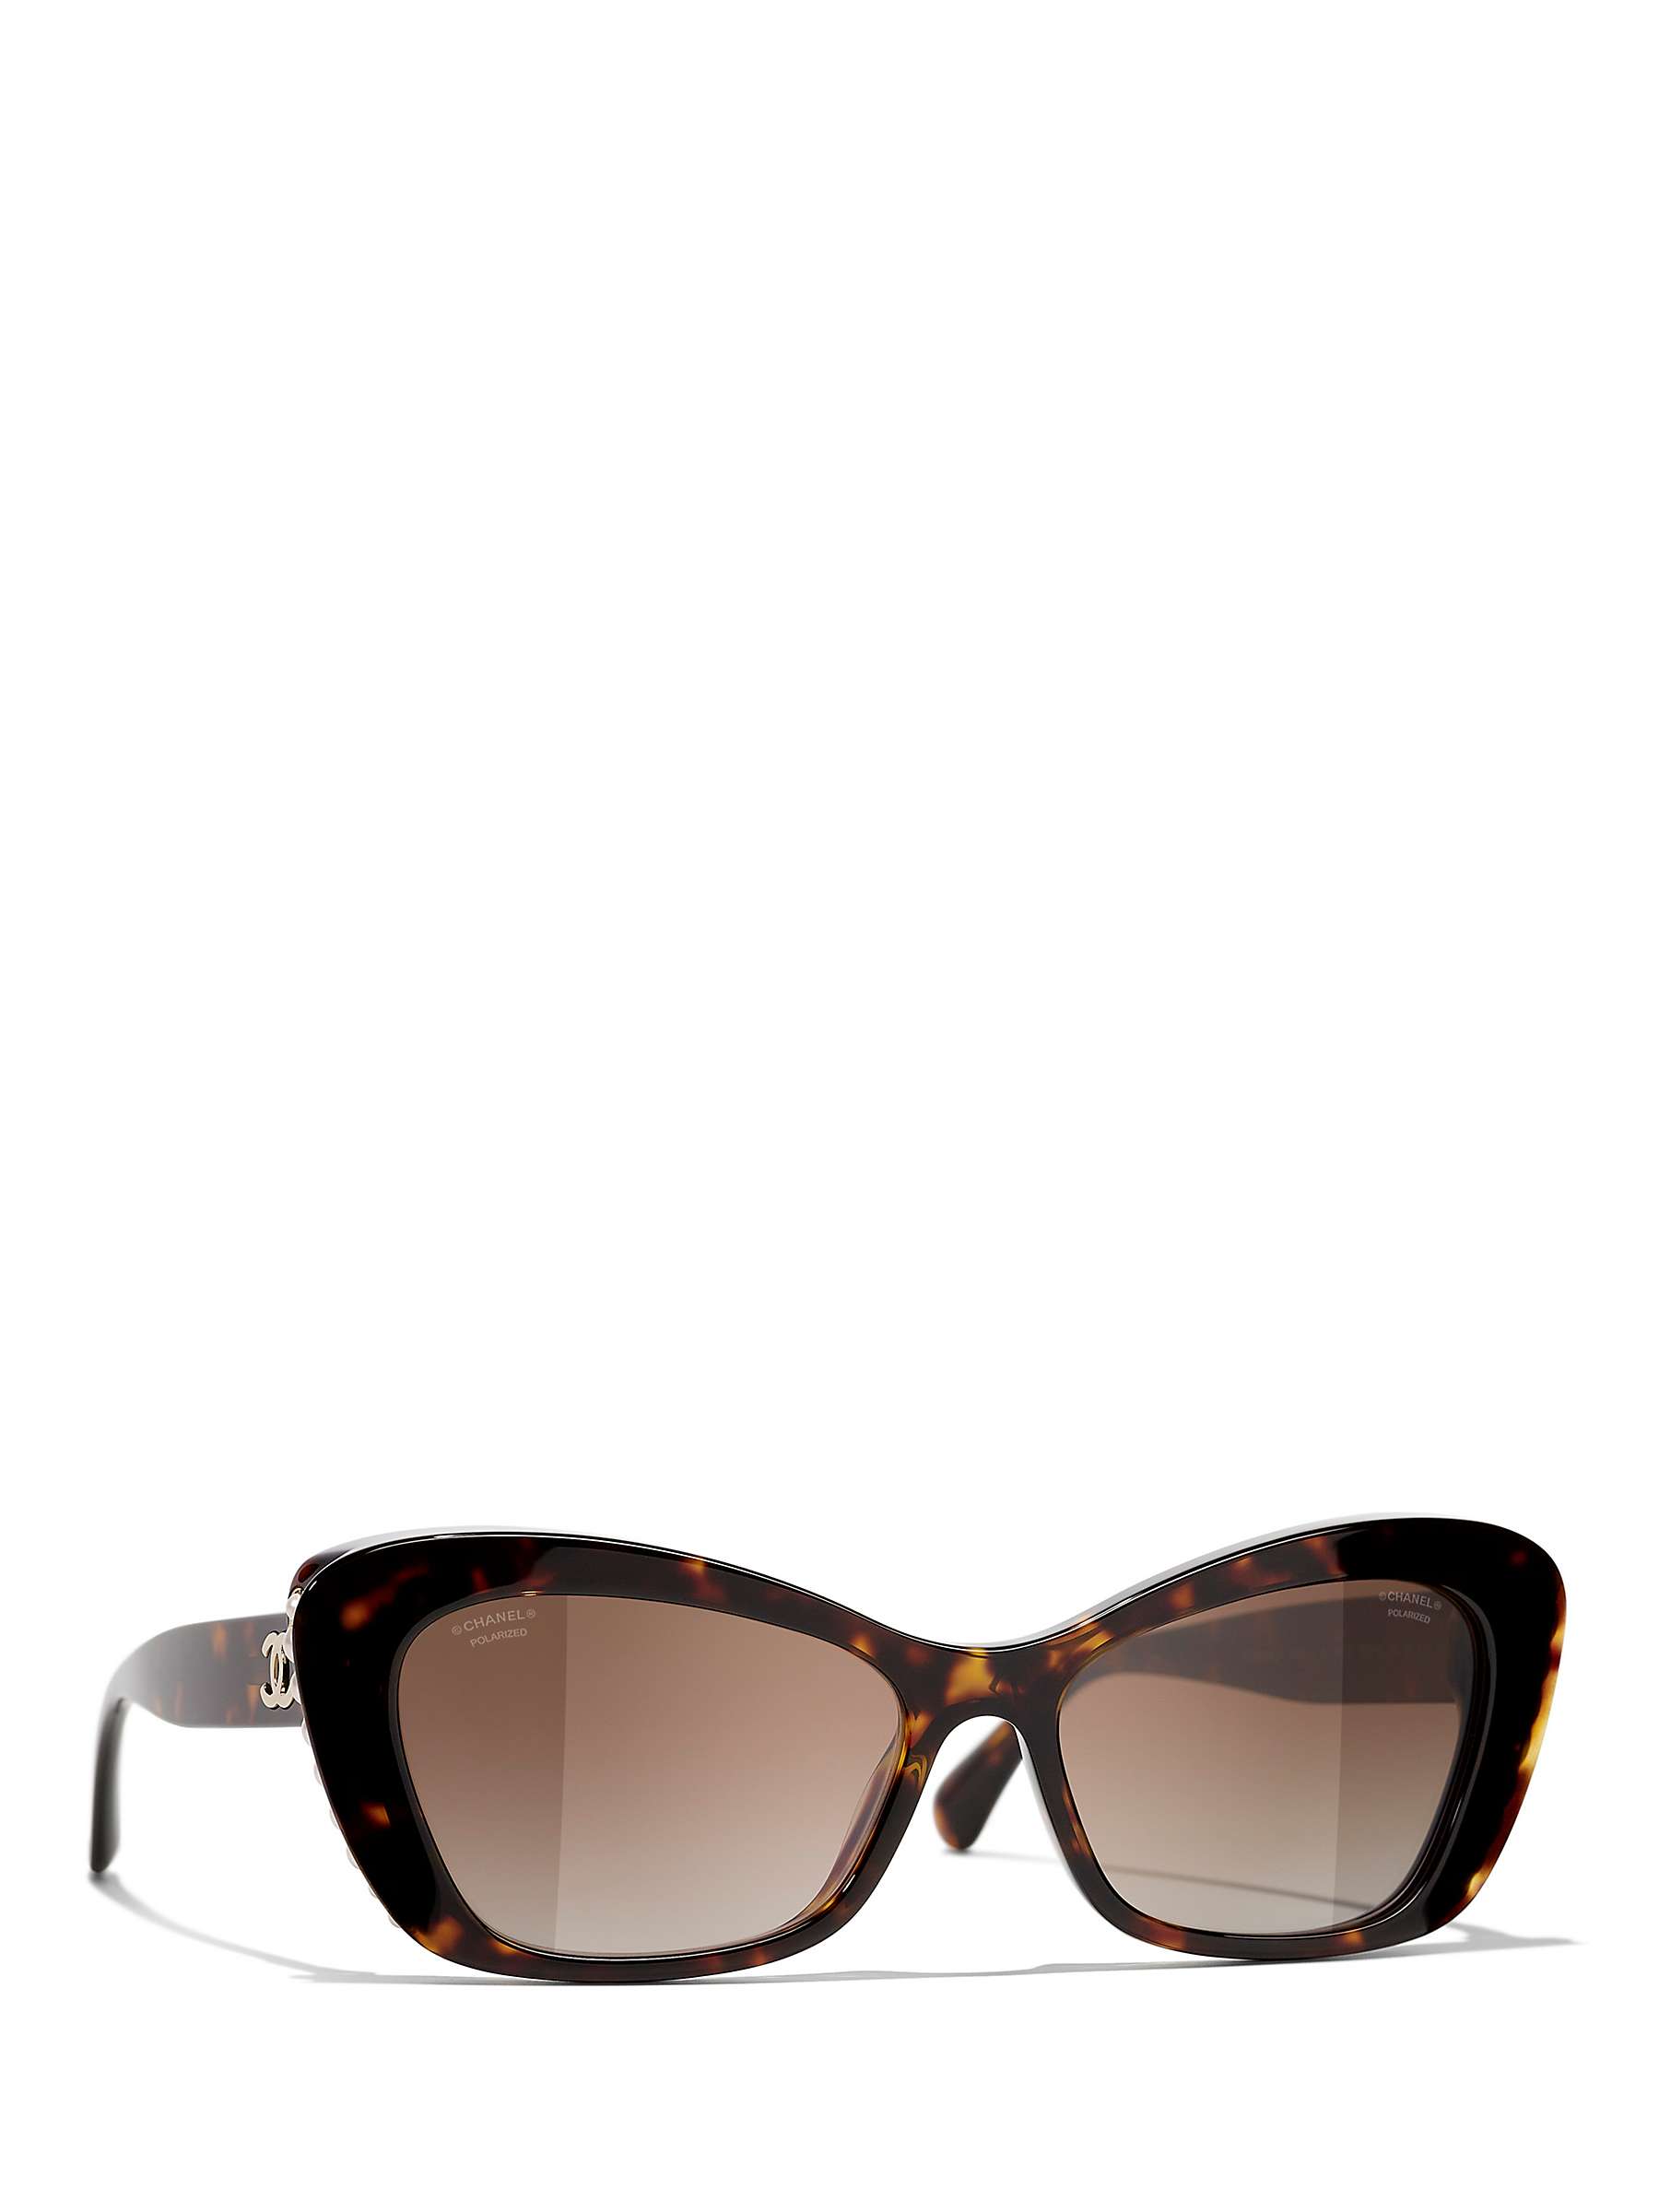 Buy CHANEL Butterfly Sunglasses CH5481H Dark Havana/Brown Gradient Online at johnlewis.com